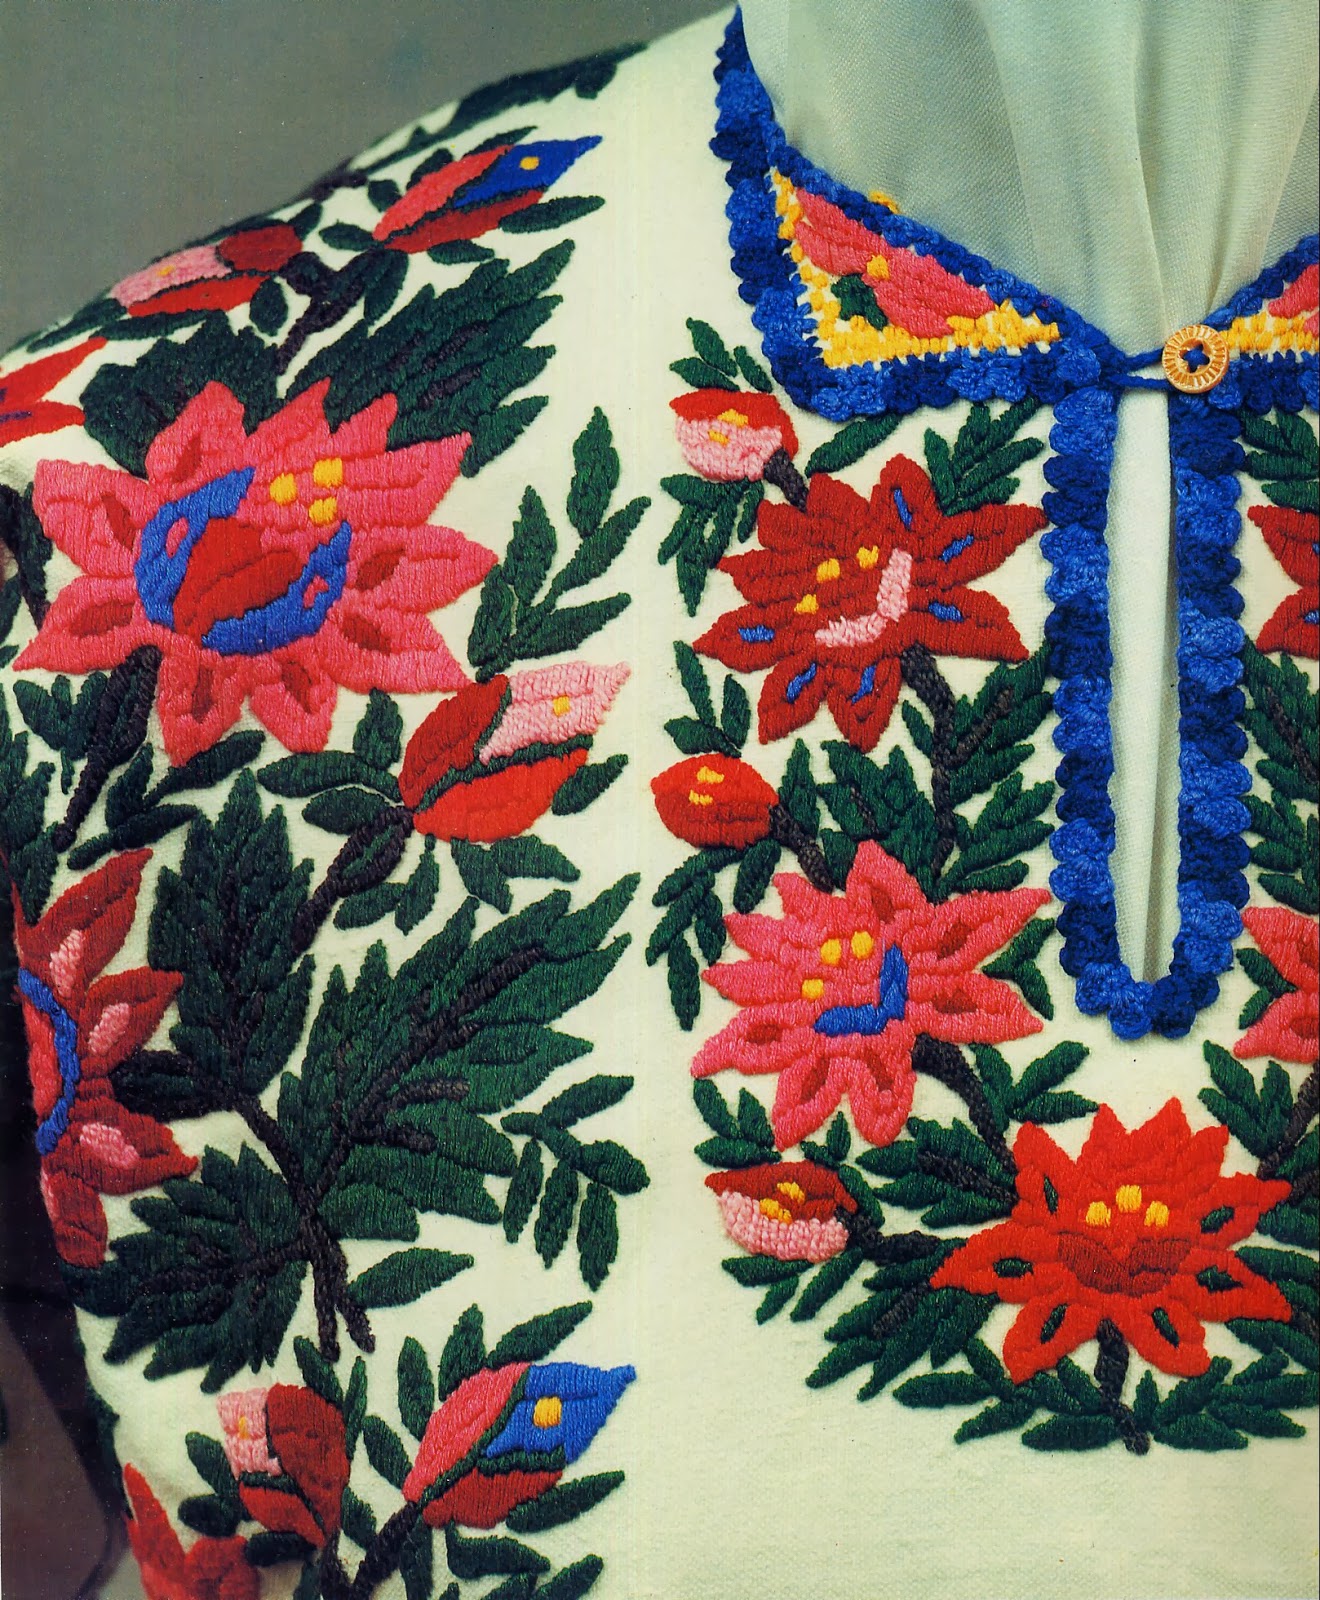 FolkCostume&Embroidery: Costume and Embroidery of Bukovyna, Ukraine ...